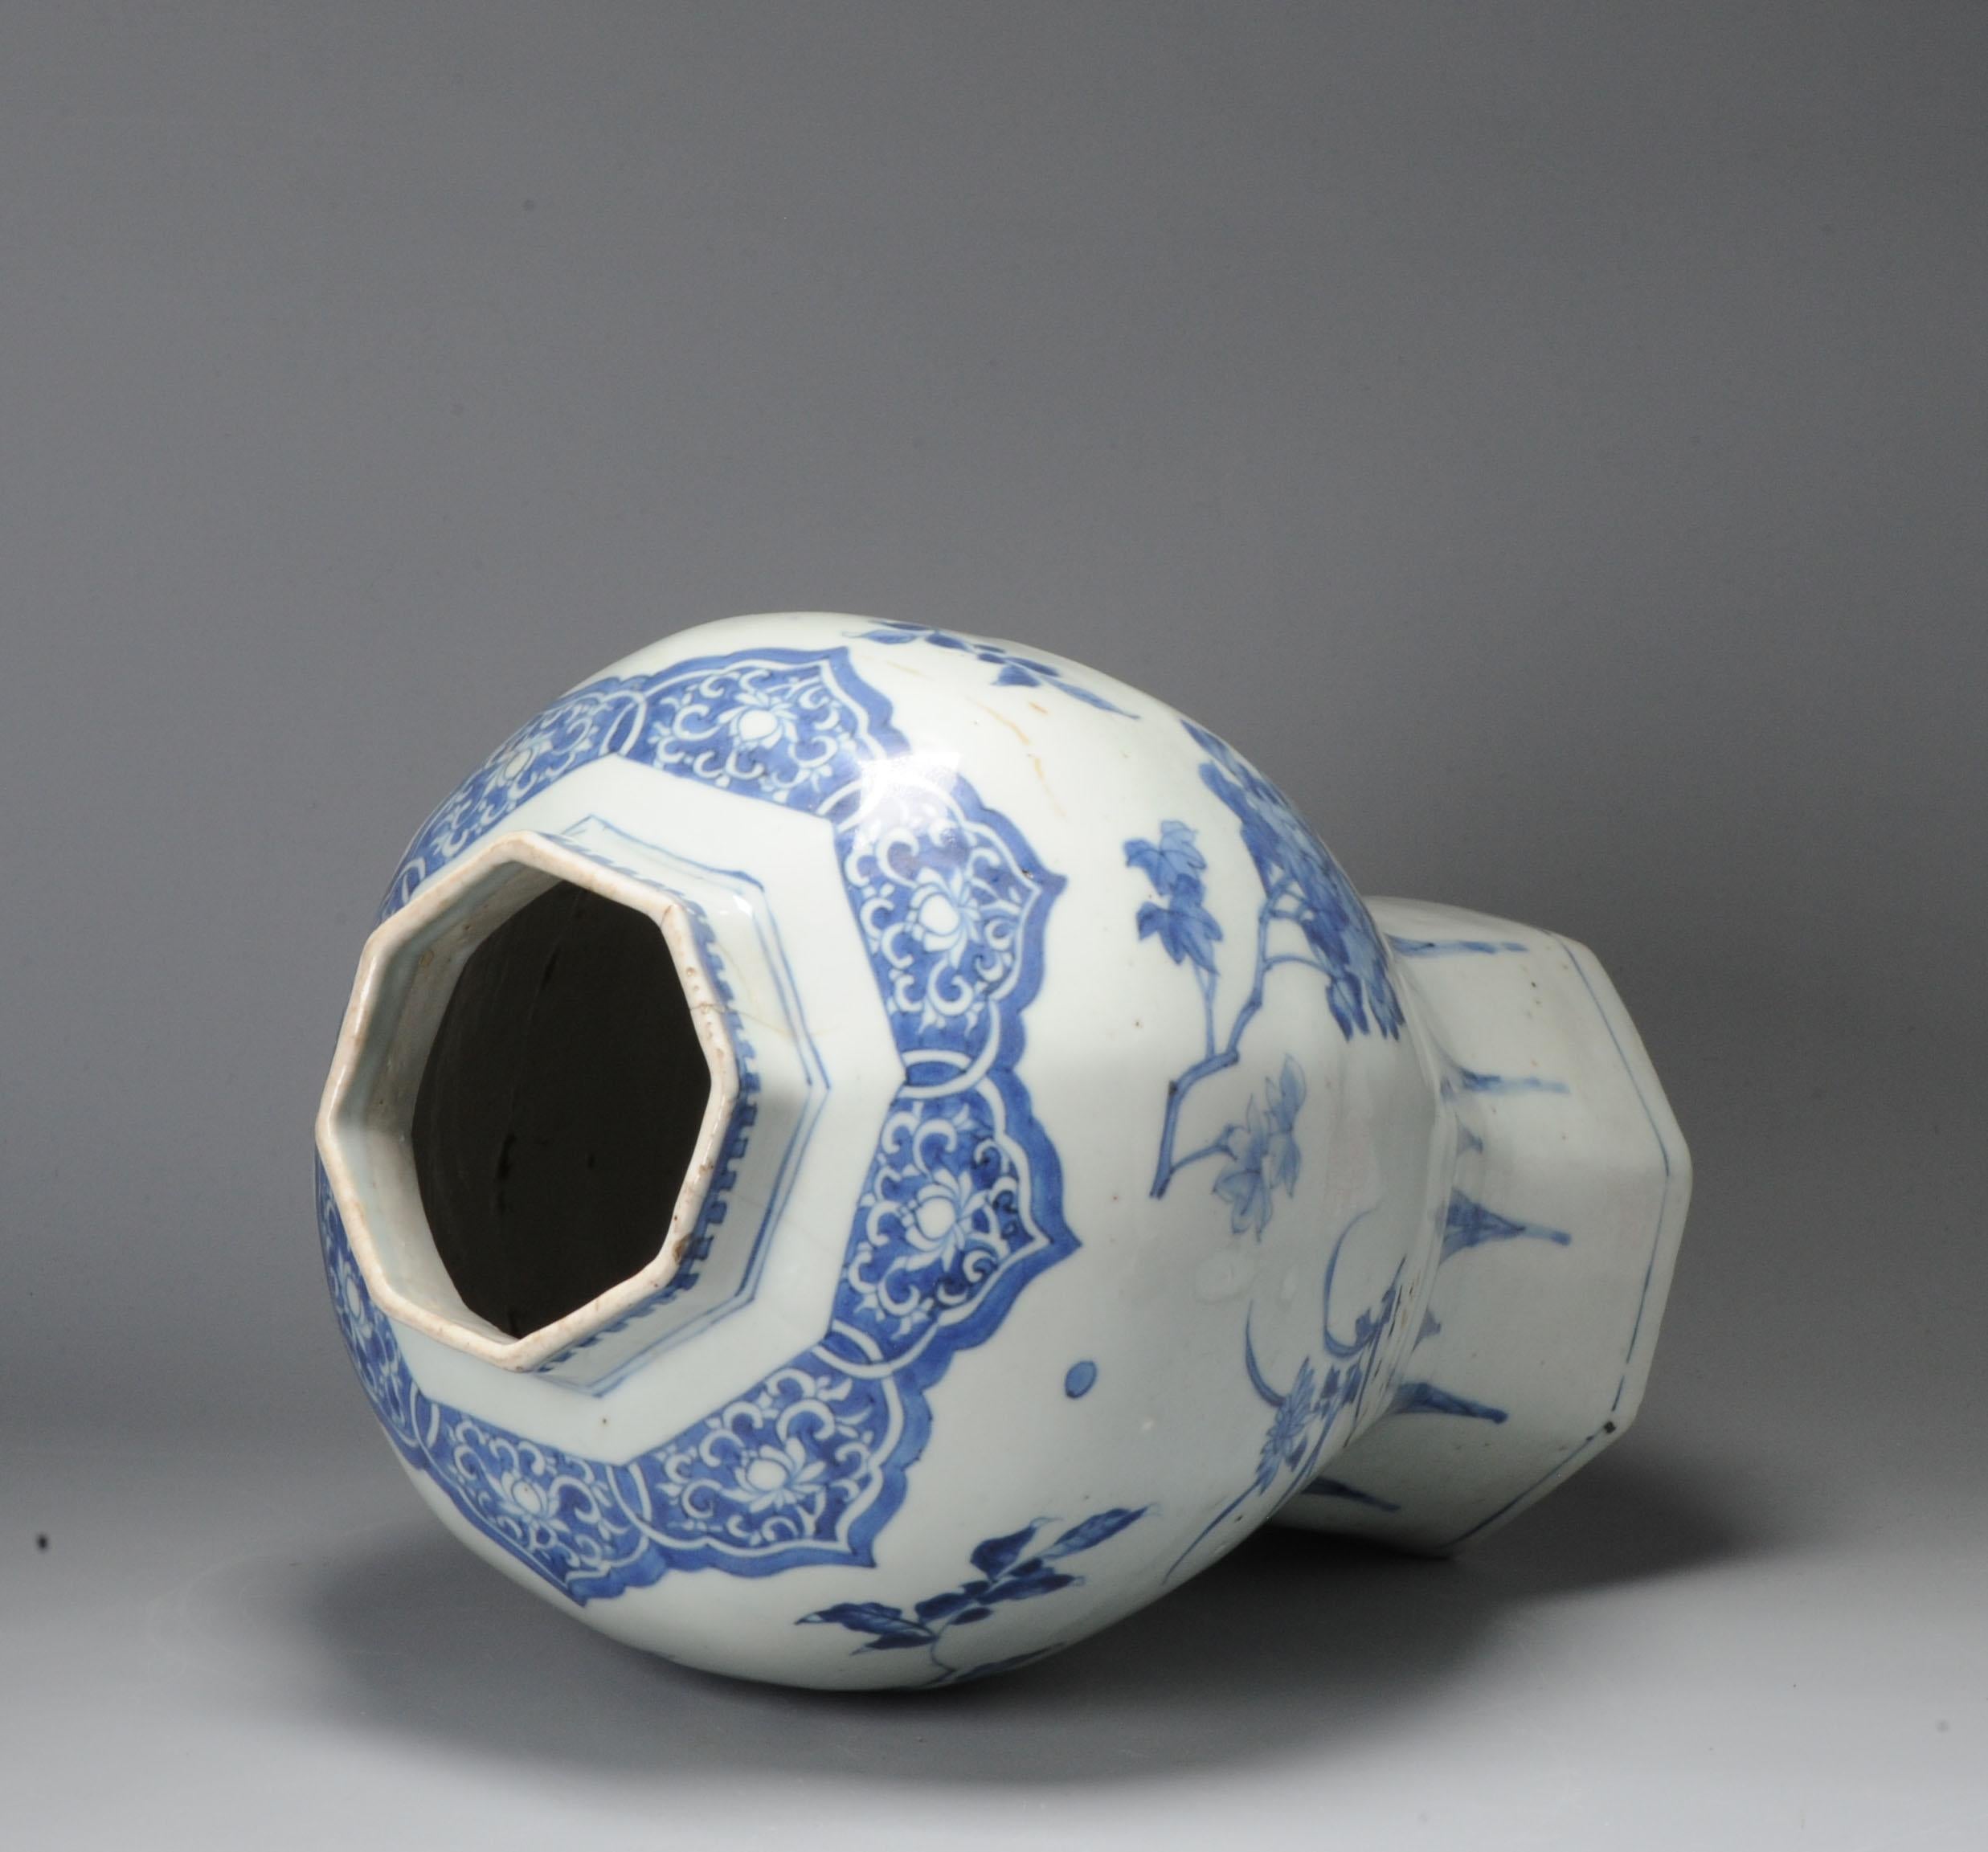 Rare Antique 17th C Transitional Chinese Porcelain Lidded Vase / Jar China For Sale 7